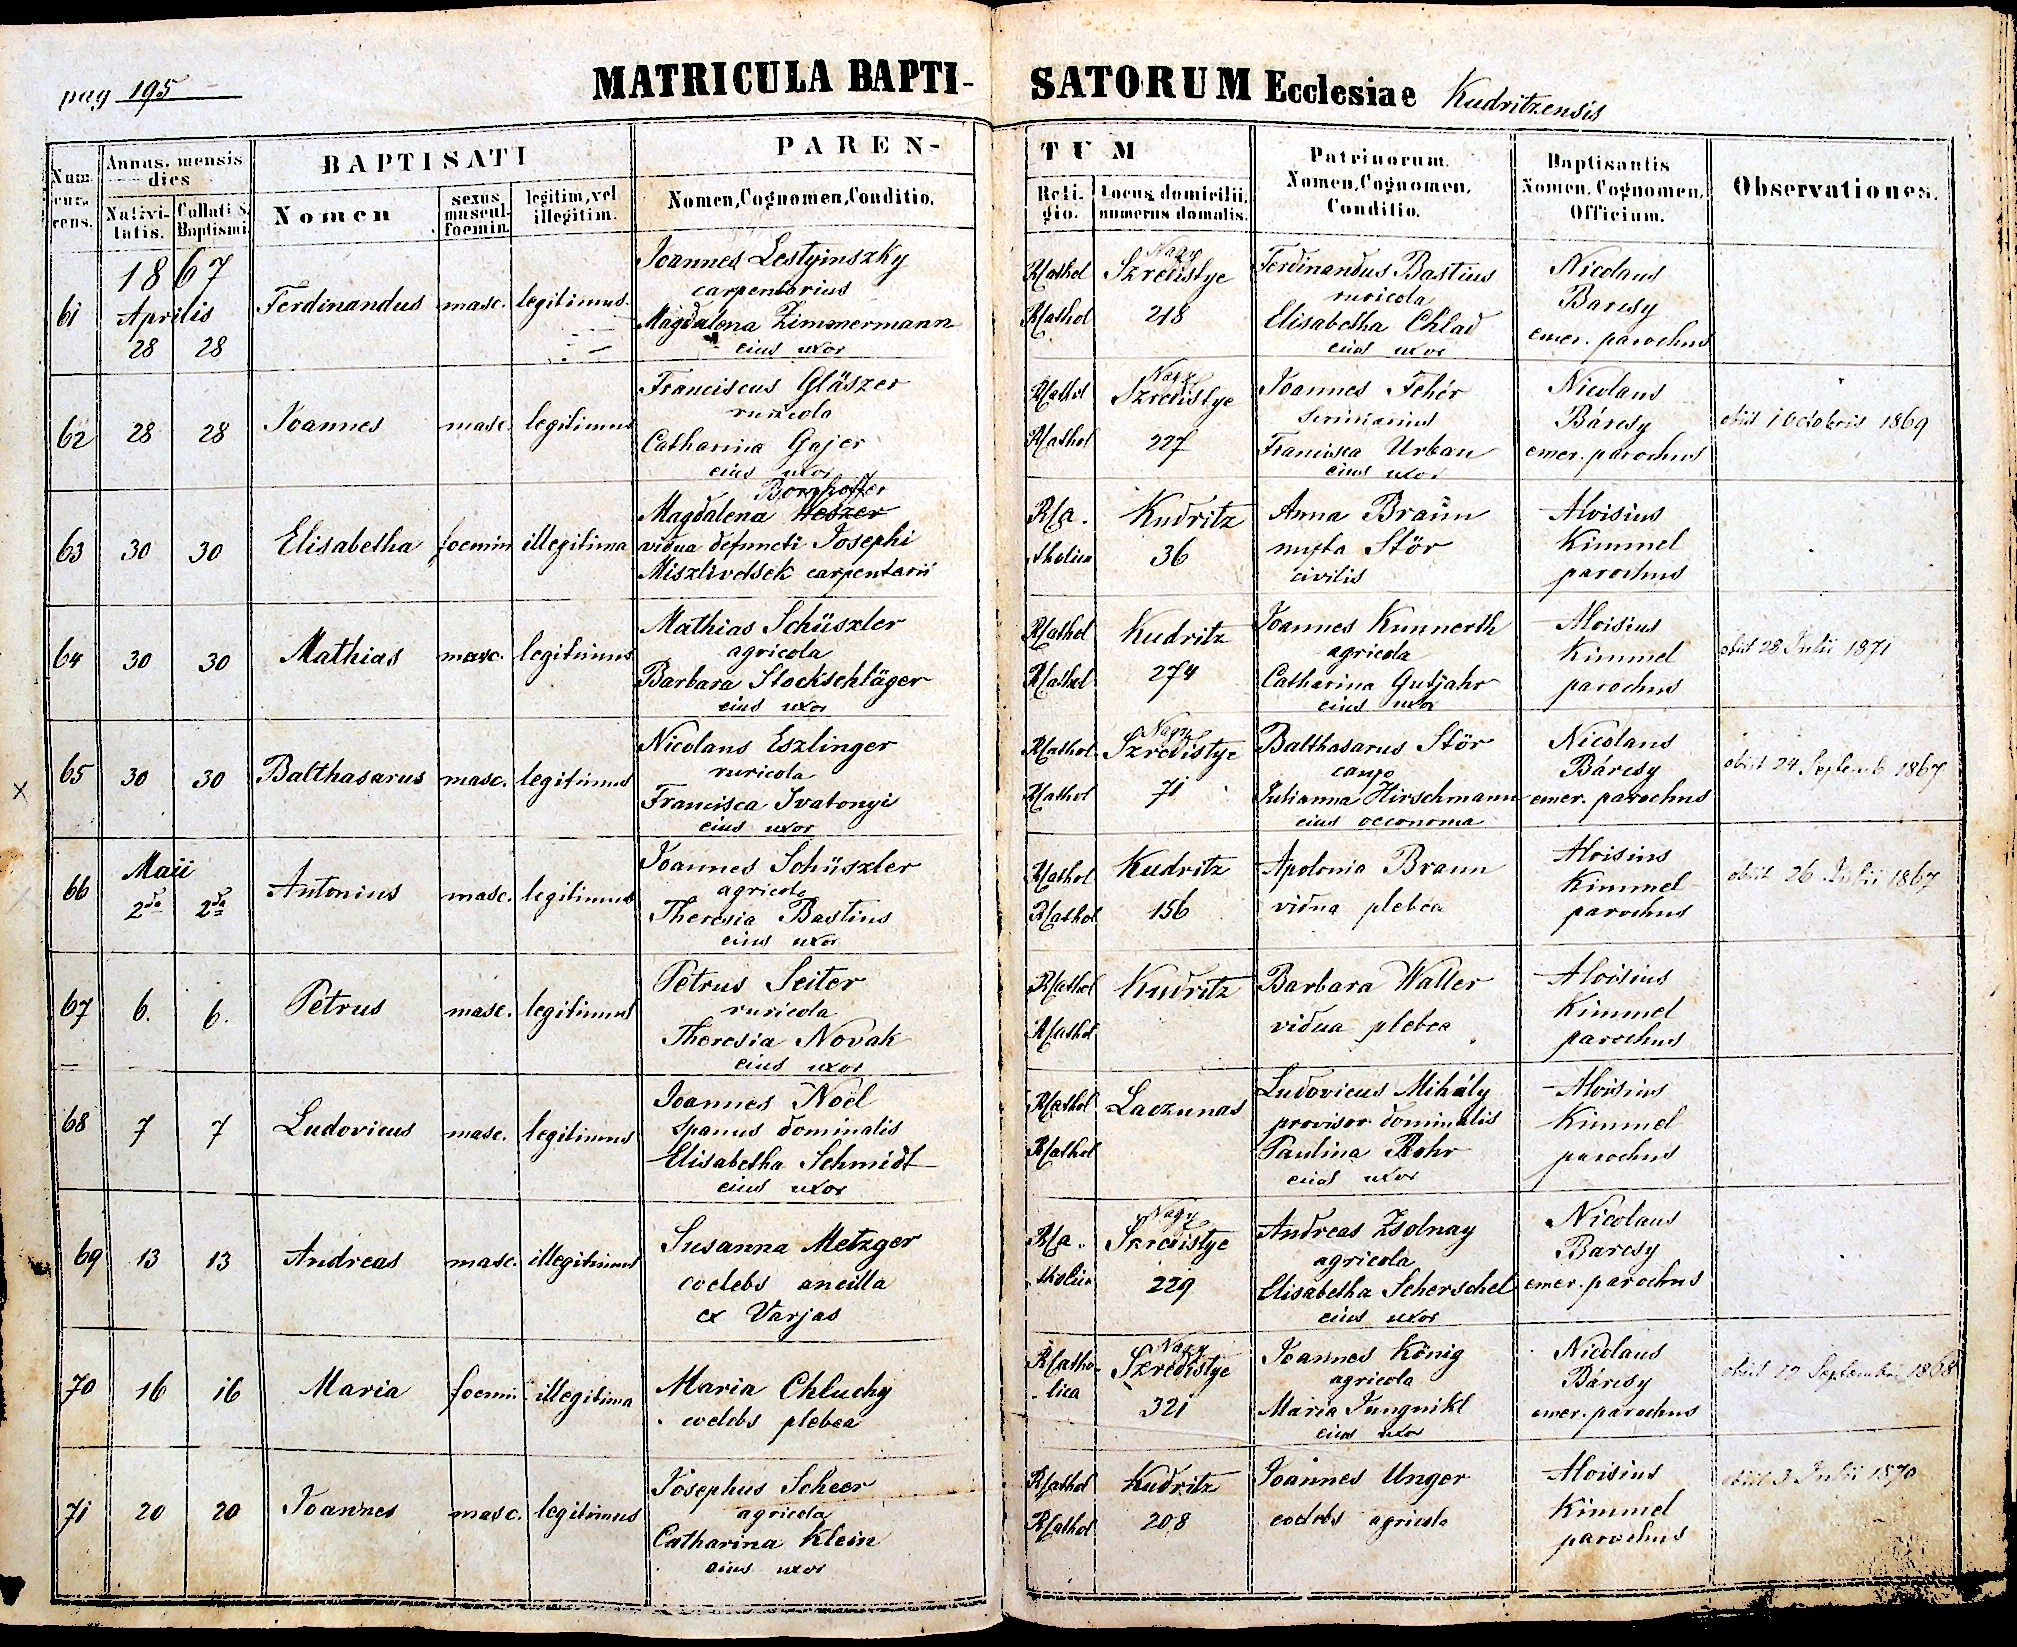 images/church_records/BIRTHS/1852-1870B/195